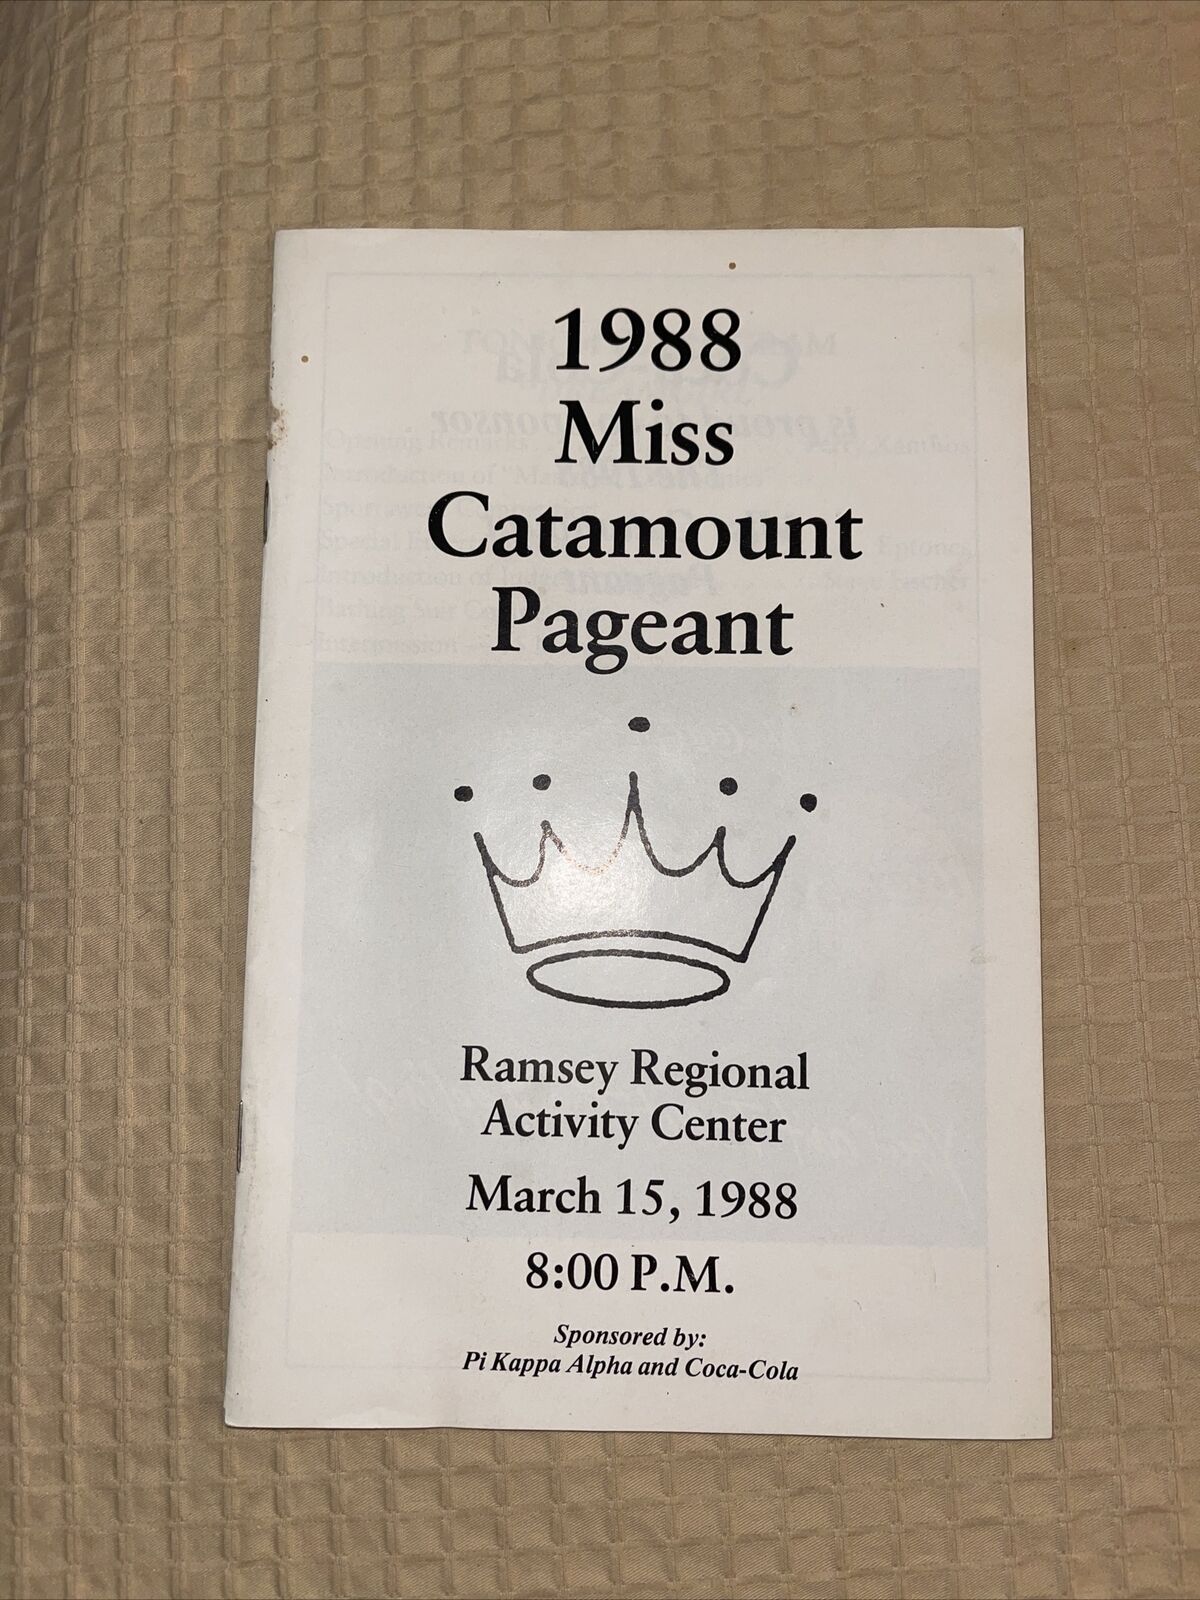 1988 Western Carolina Miss Catamount Pageant program